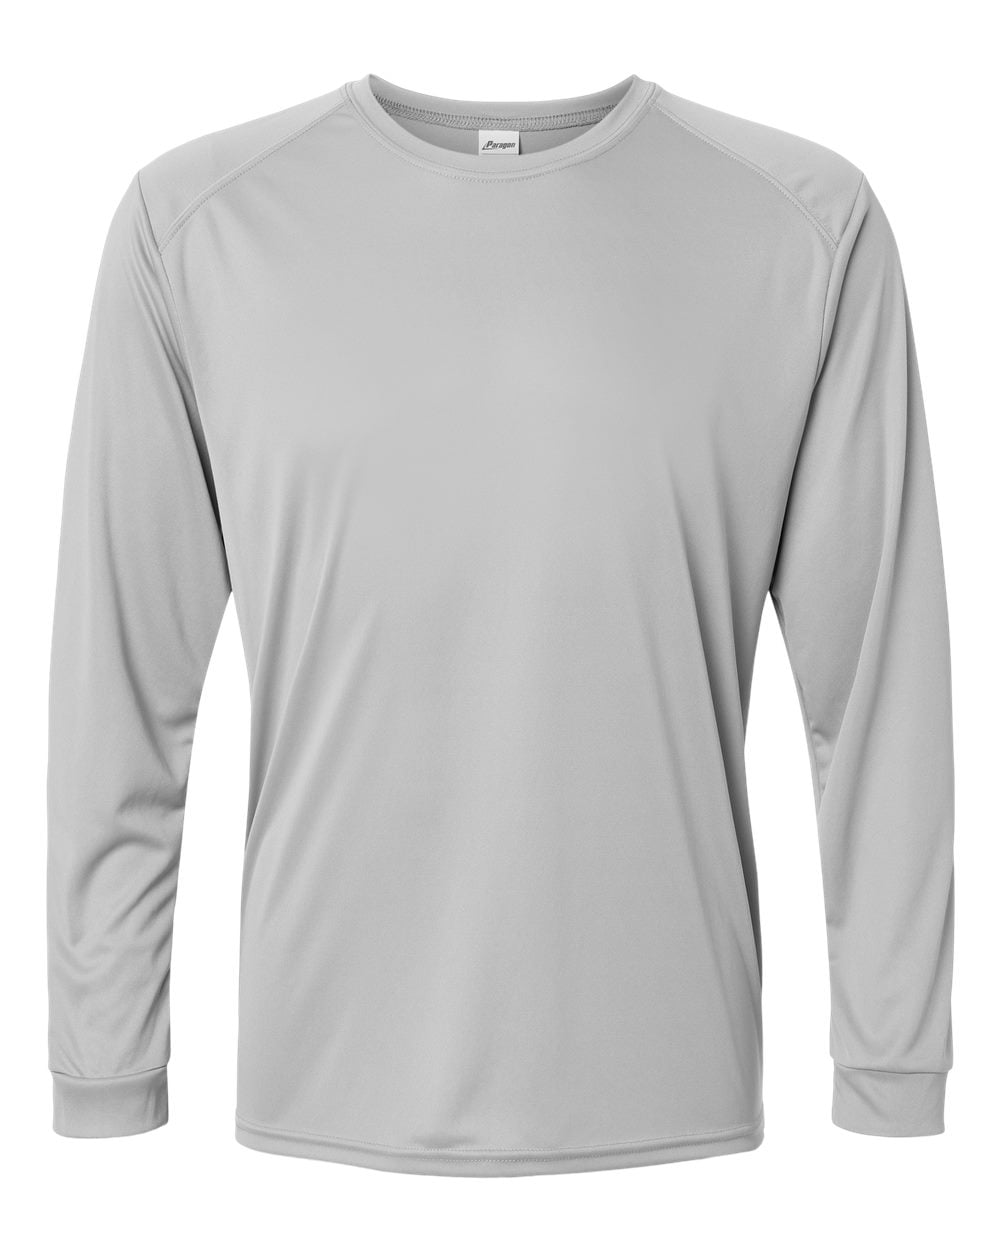 Paragon Long Islander Performance Long Sleeve T-Shirt, Heather Grey - 4XL 